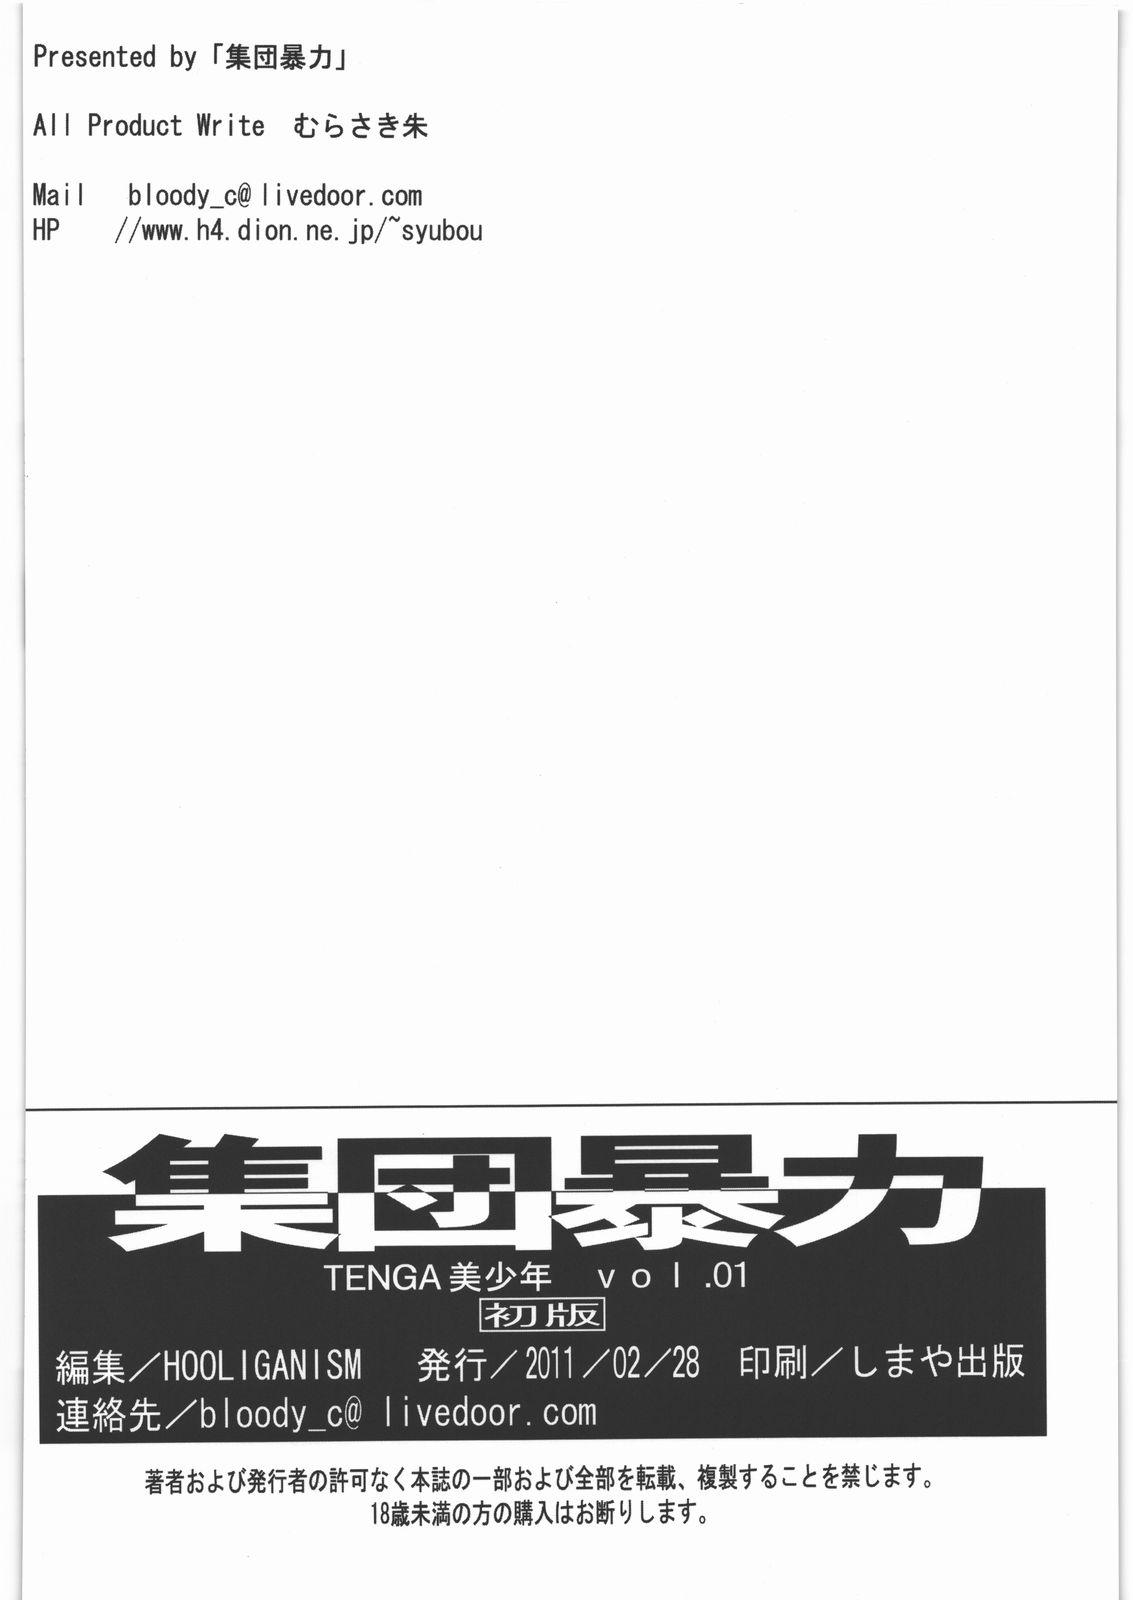 TENGA Bishounen Vol.01 20